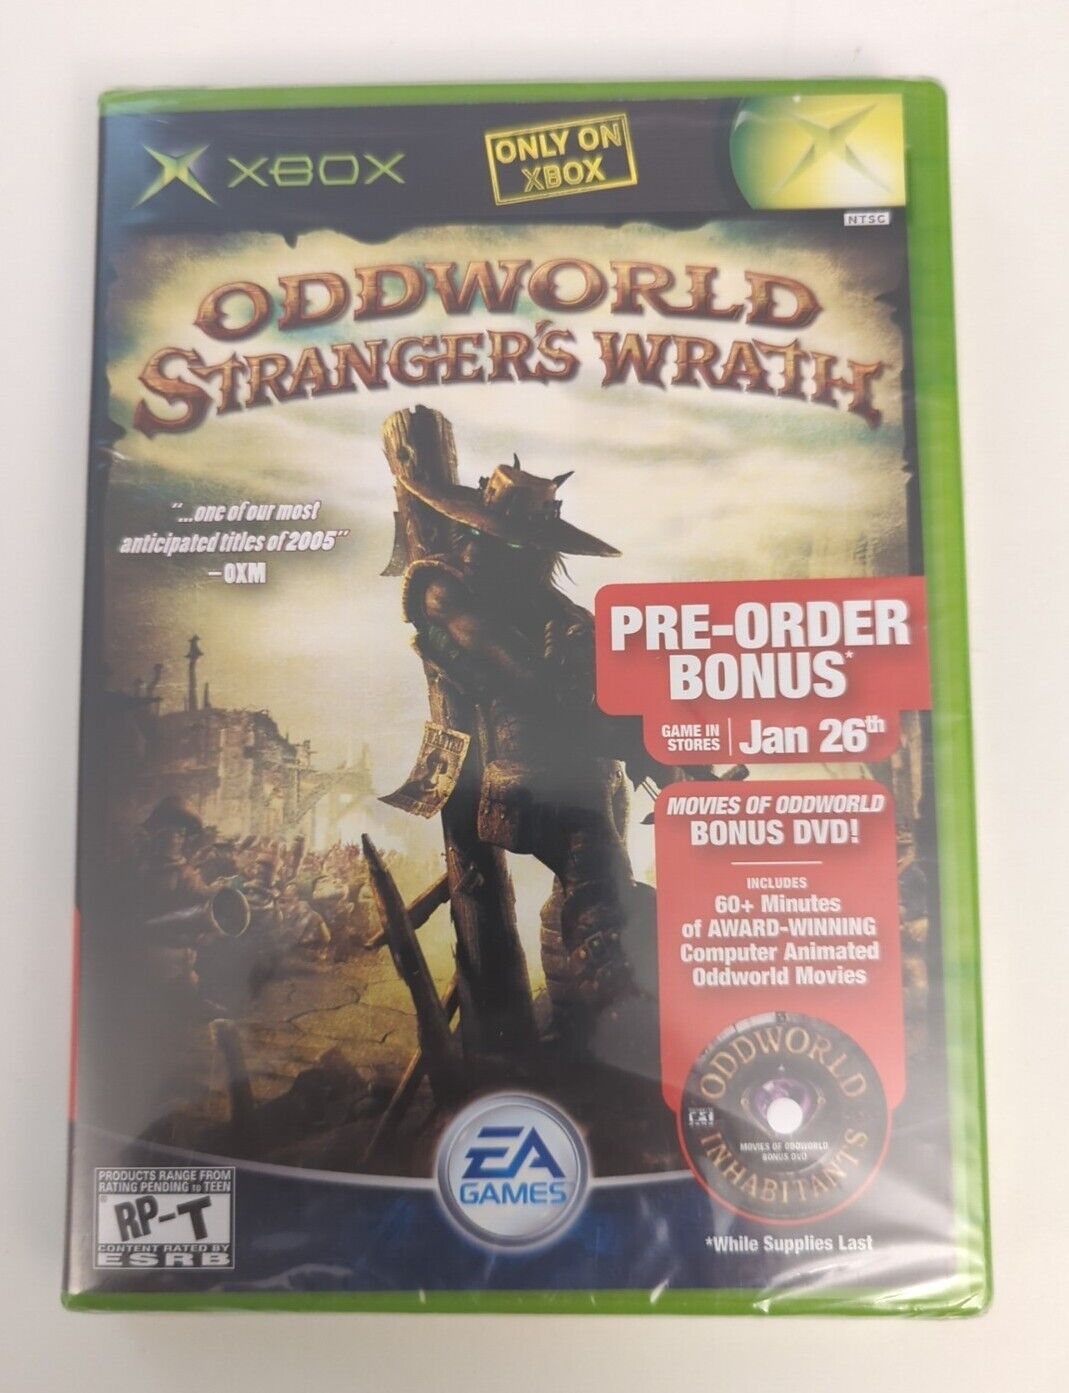 Oddworld Bonus DVD - Stranger’s Wrath Not A Game - Promo Item New sealed - xbox